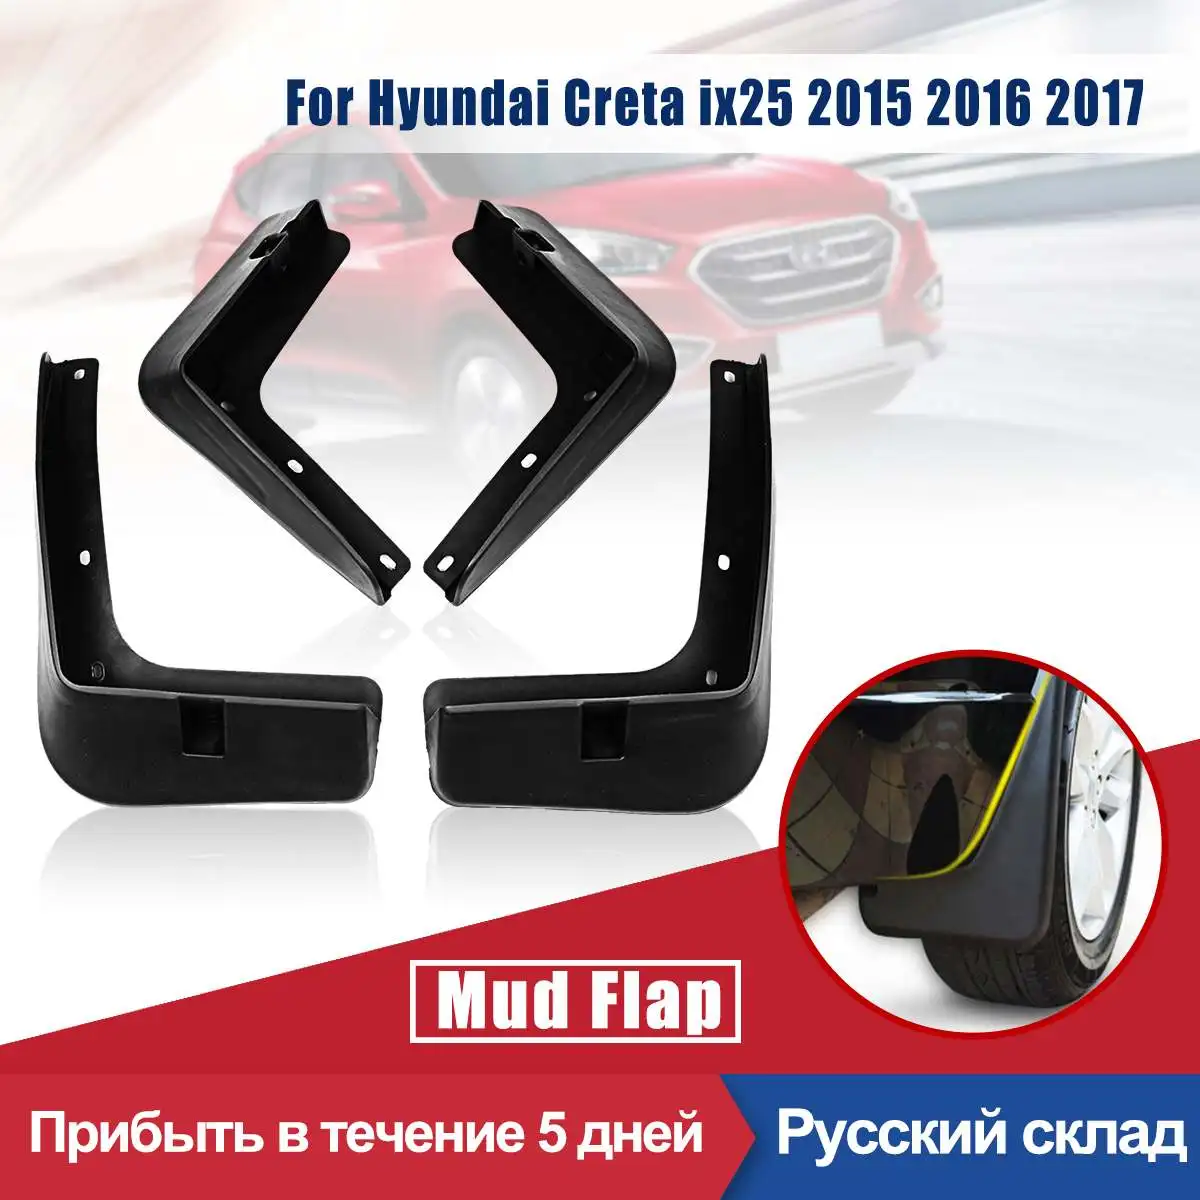 

Car Front Rear Mudguards Splash Guards Fender Flares Mud Flaps For Hyundai Creta ix25 2015 2016 2017 2018 2019